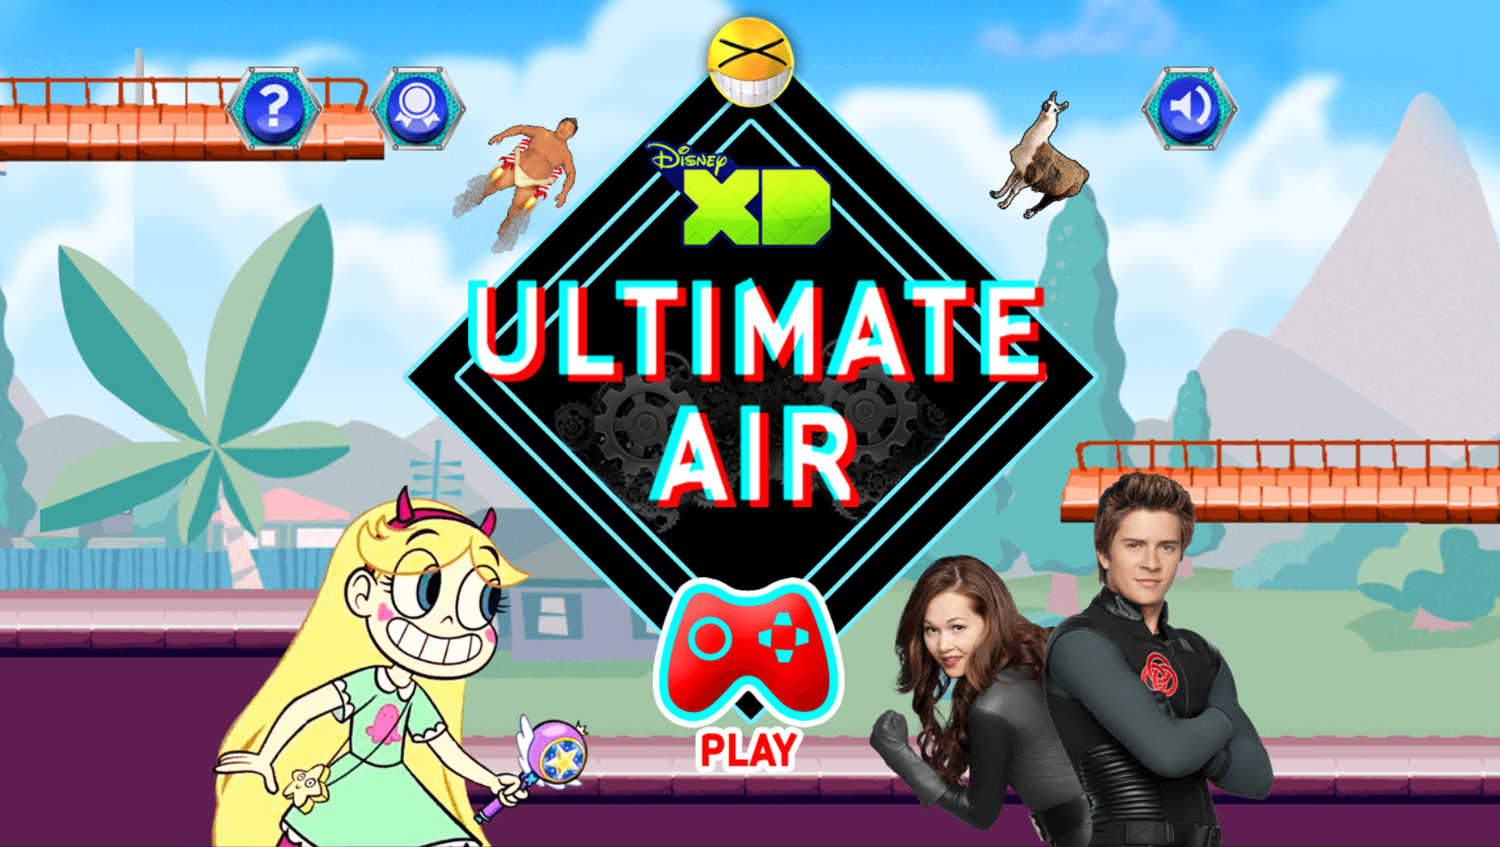 Ultimate Air Game Welcome Screen Screenshot.